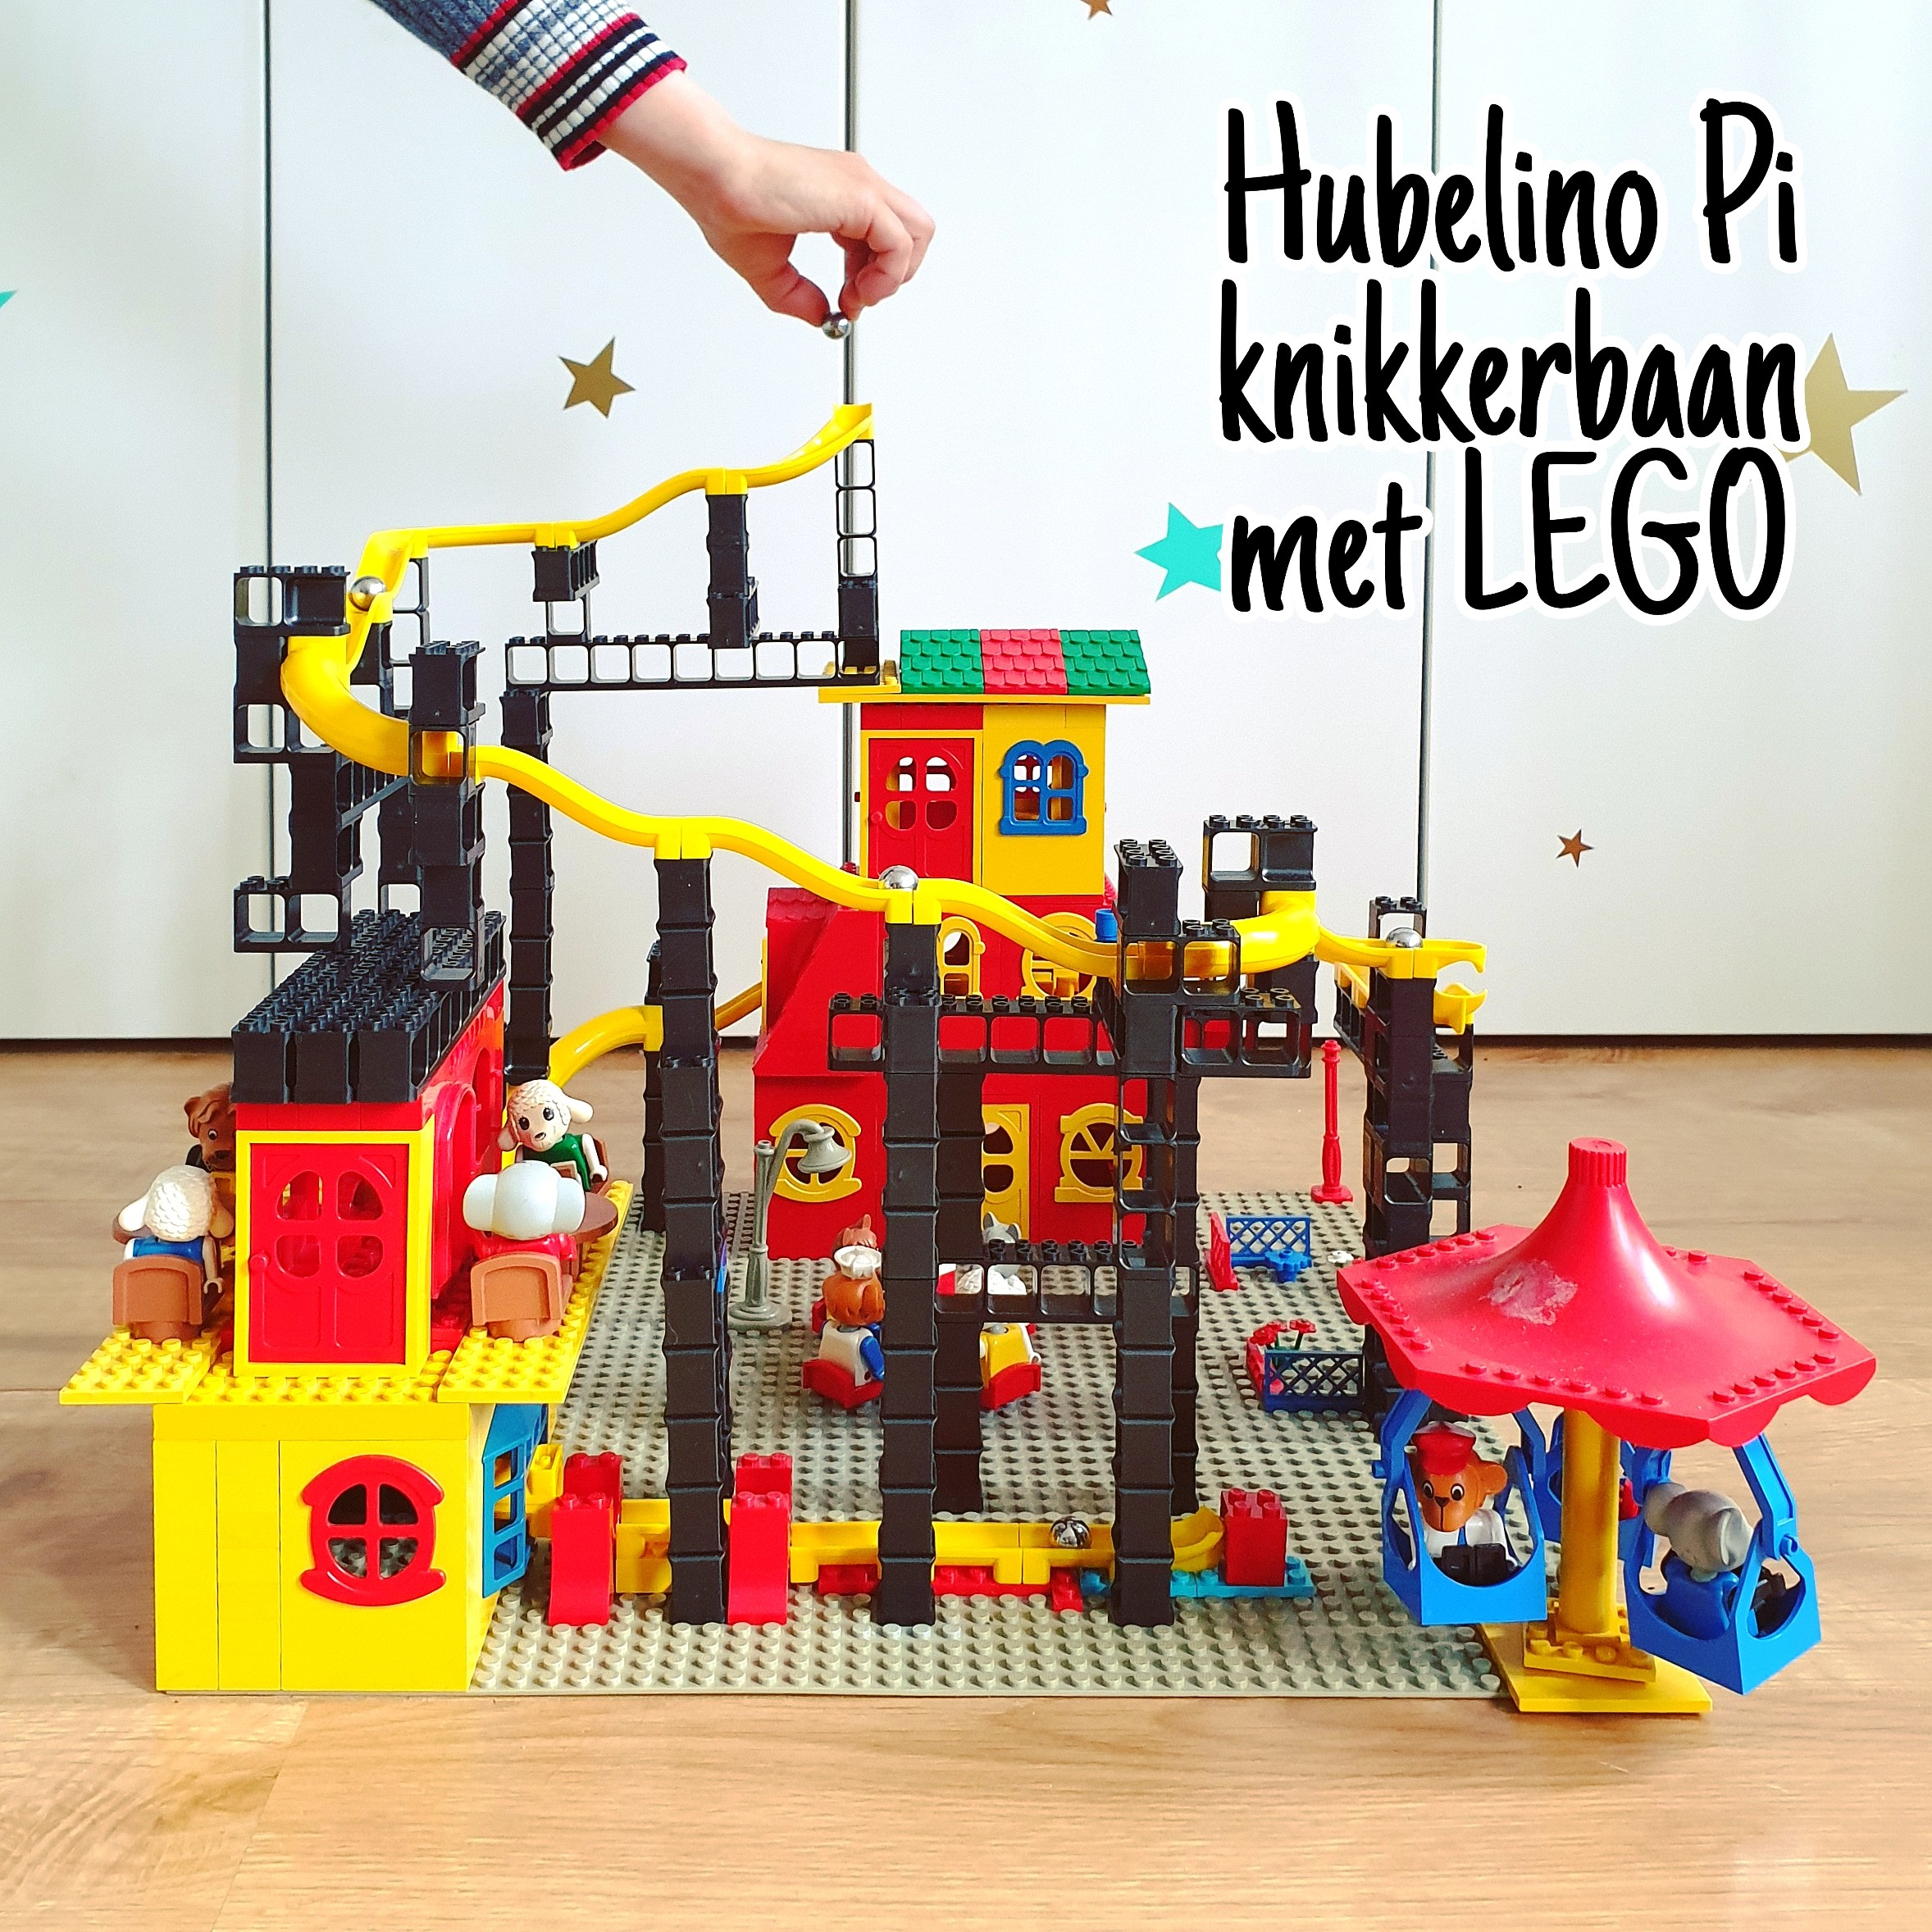 Hoeveelheid van Fobie blaas gat Hubelino Pi knikkerbaan: review en ideeën om te combineren met LEGO Leuk  met kids